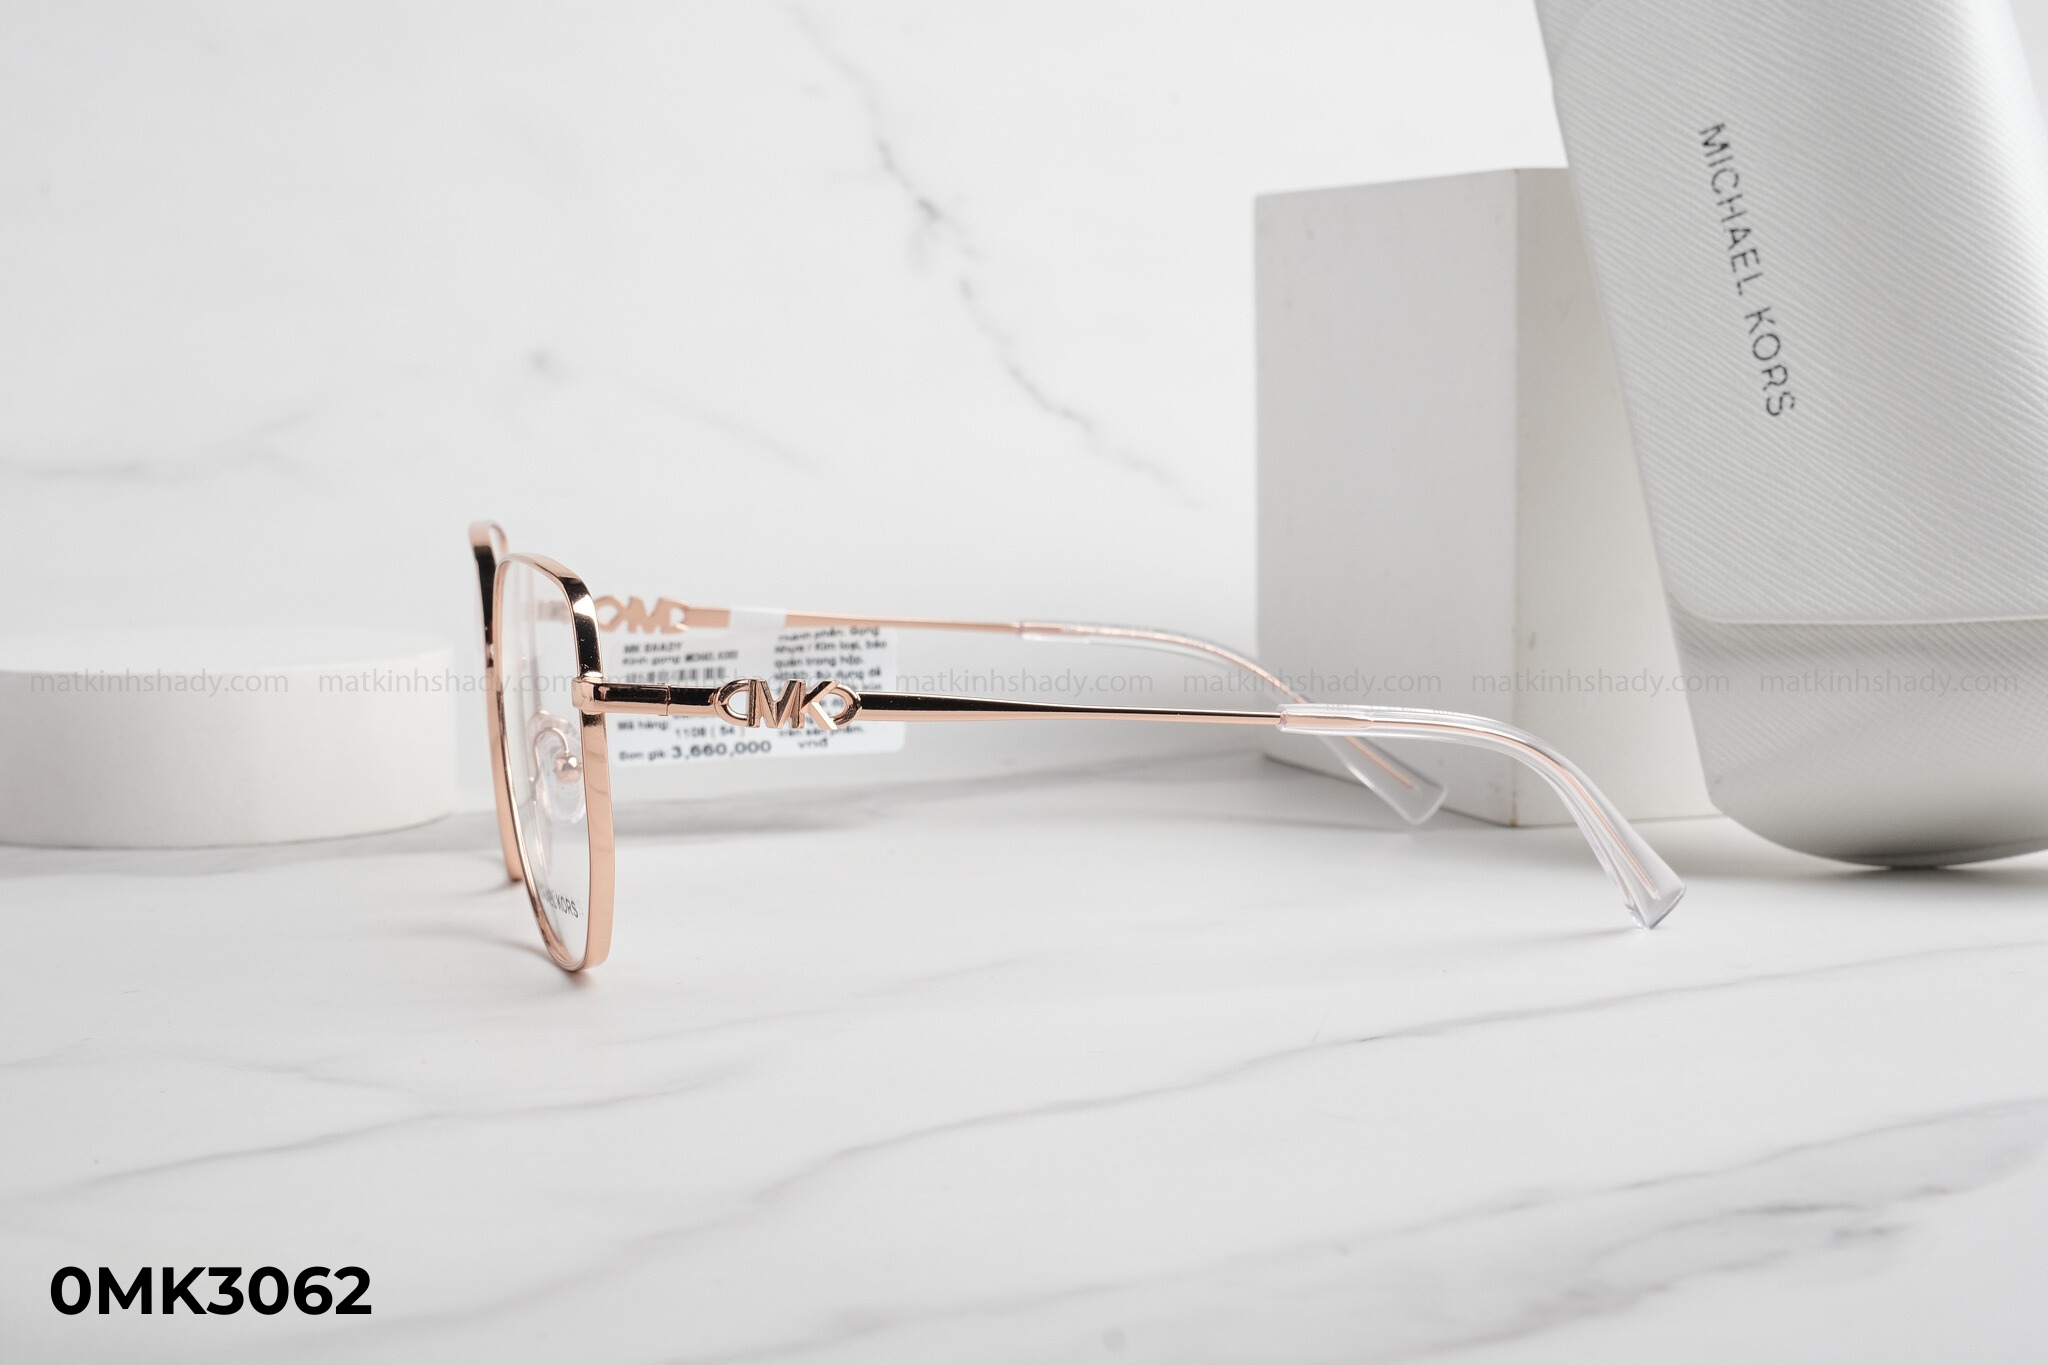  Michael Kors Eyewear - Glasses - 0MK3062 